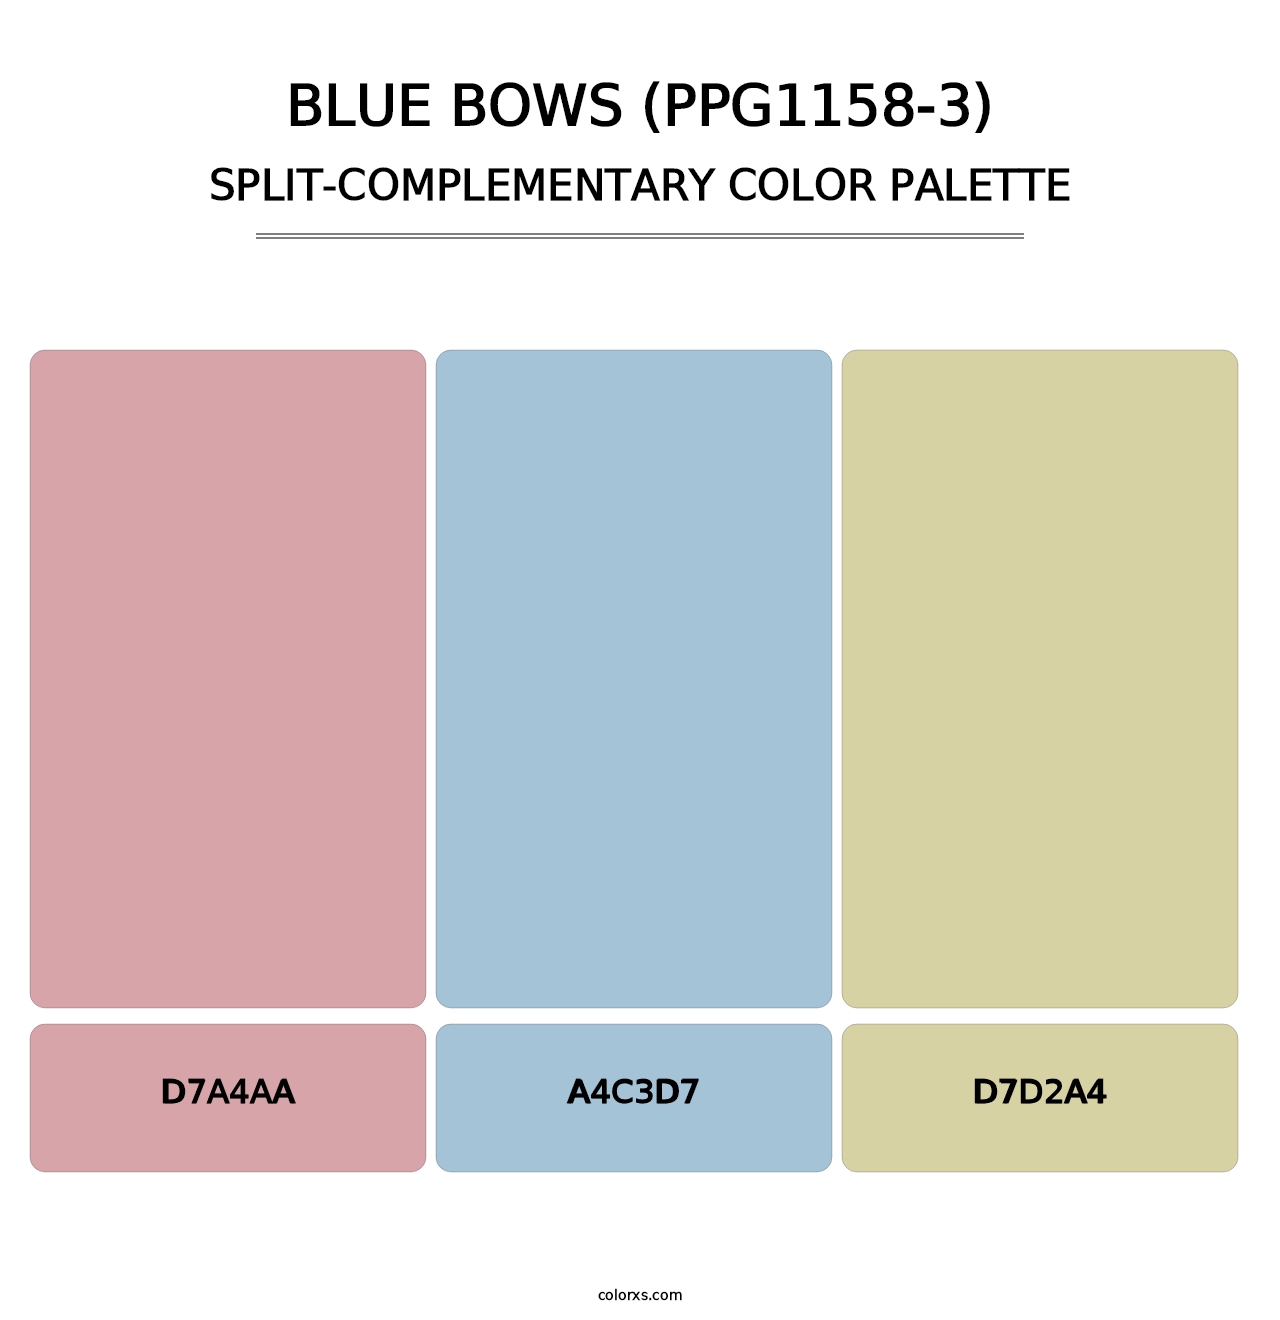 Blue Bows (PPG1158-3) - Split-Complementary Color Palette